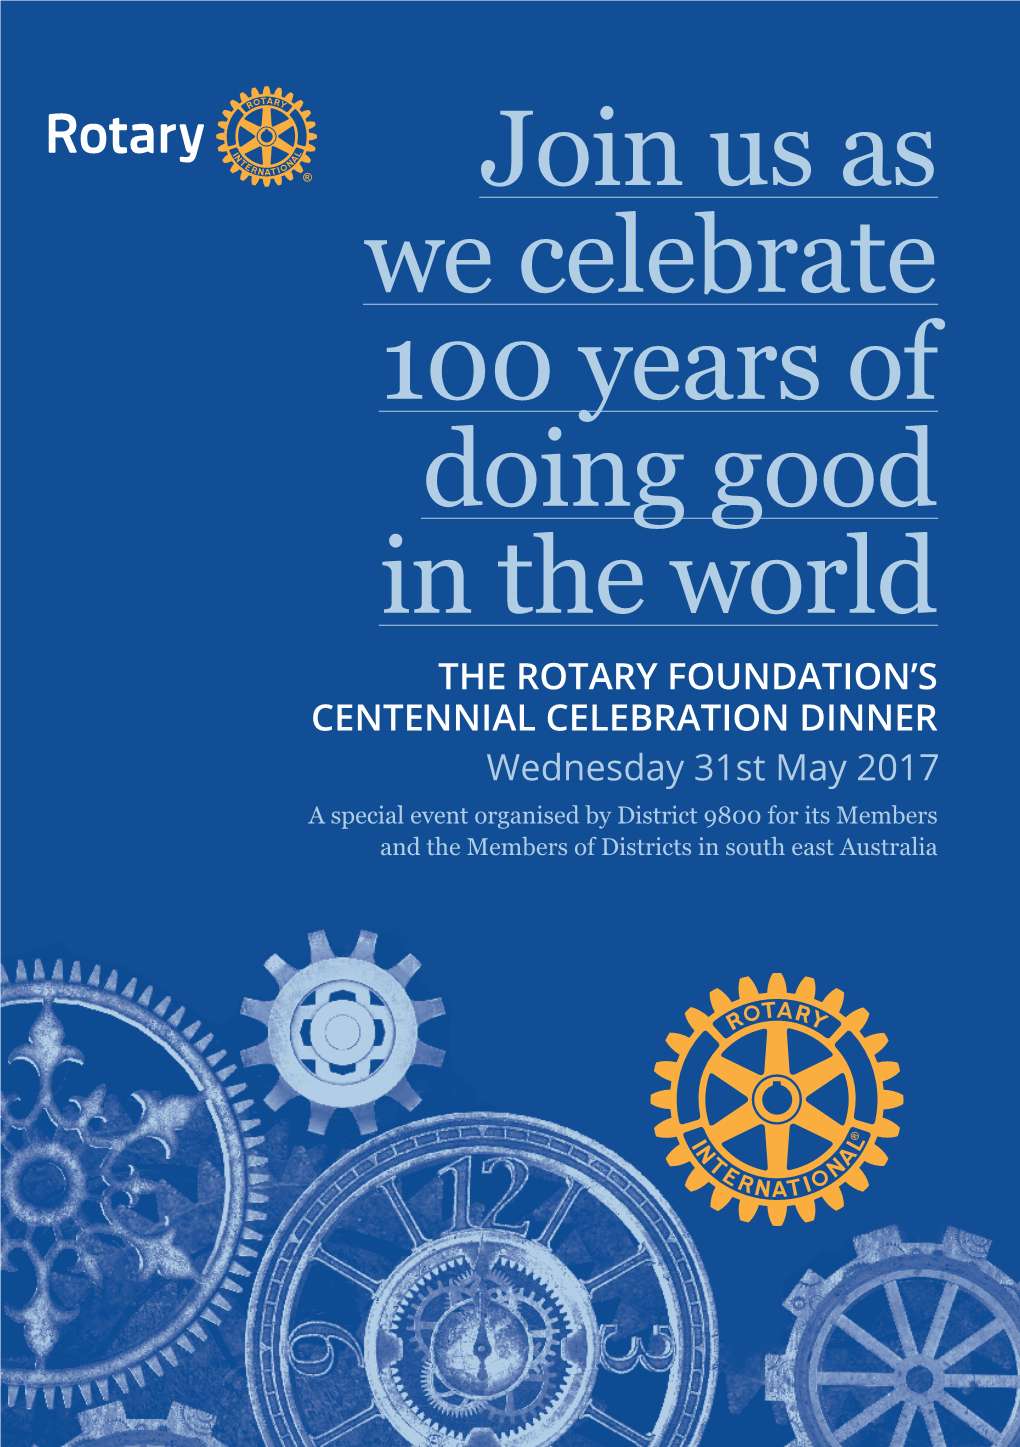 The Rotary Foundation's Centennial Celebration Dinner